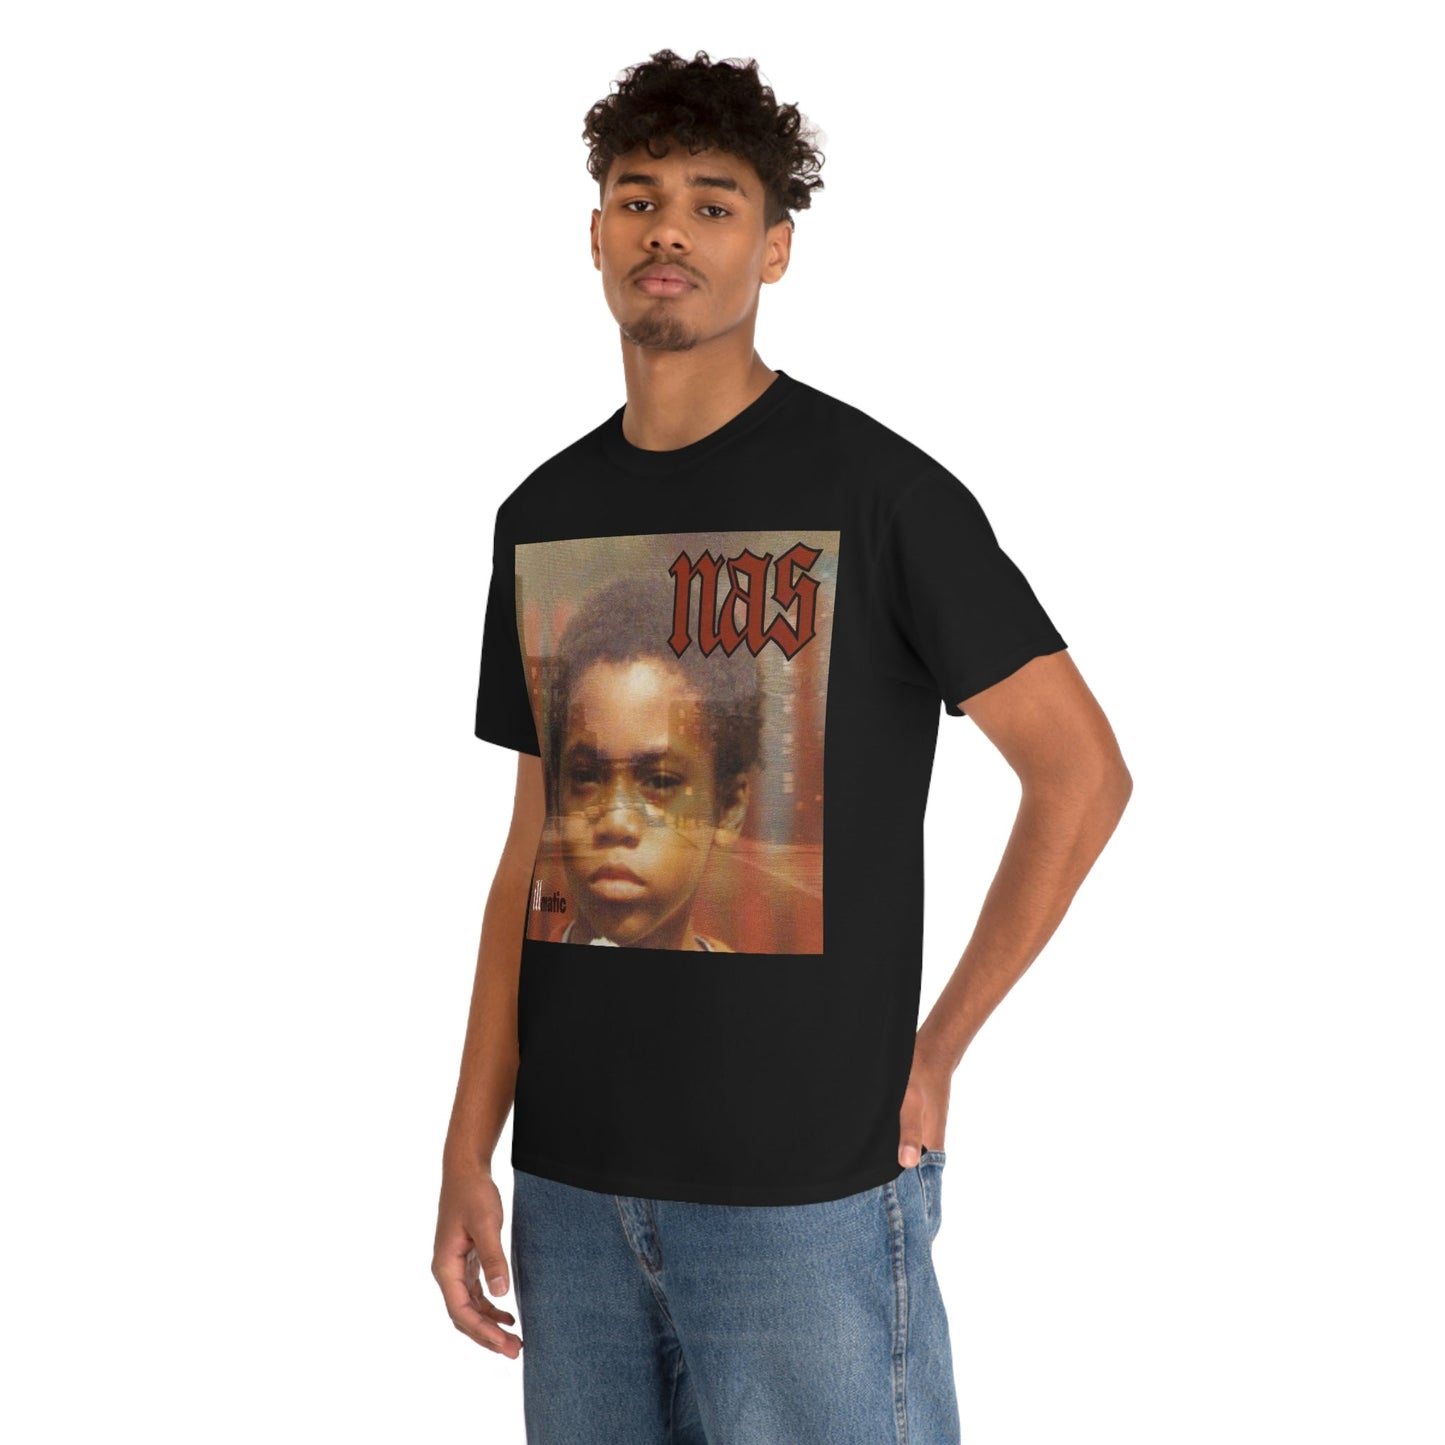 Nas Illmatic Album Cover T-Shirt - RetroTeeShop